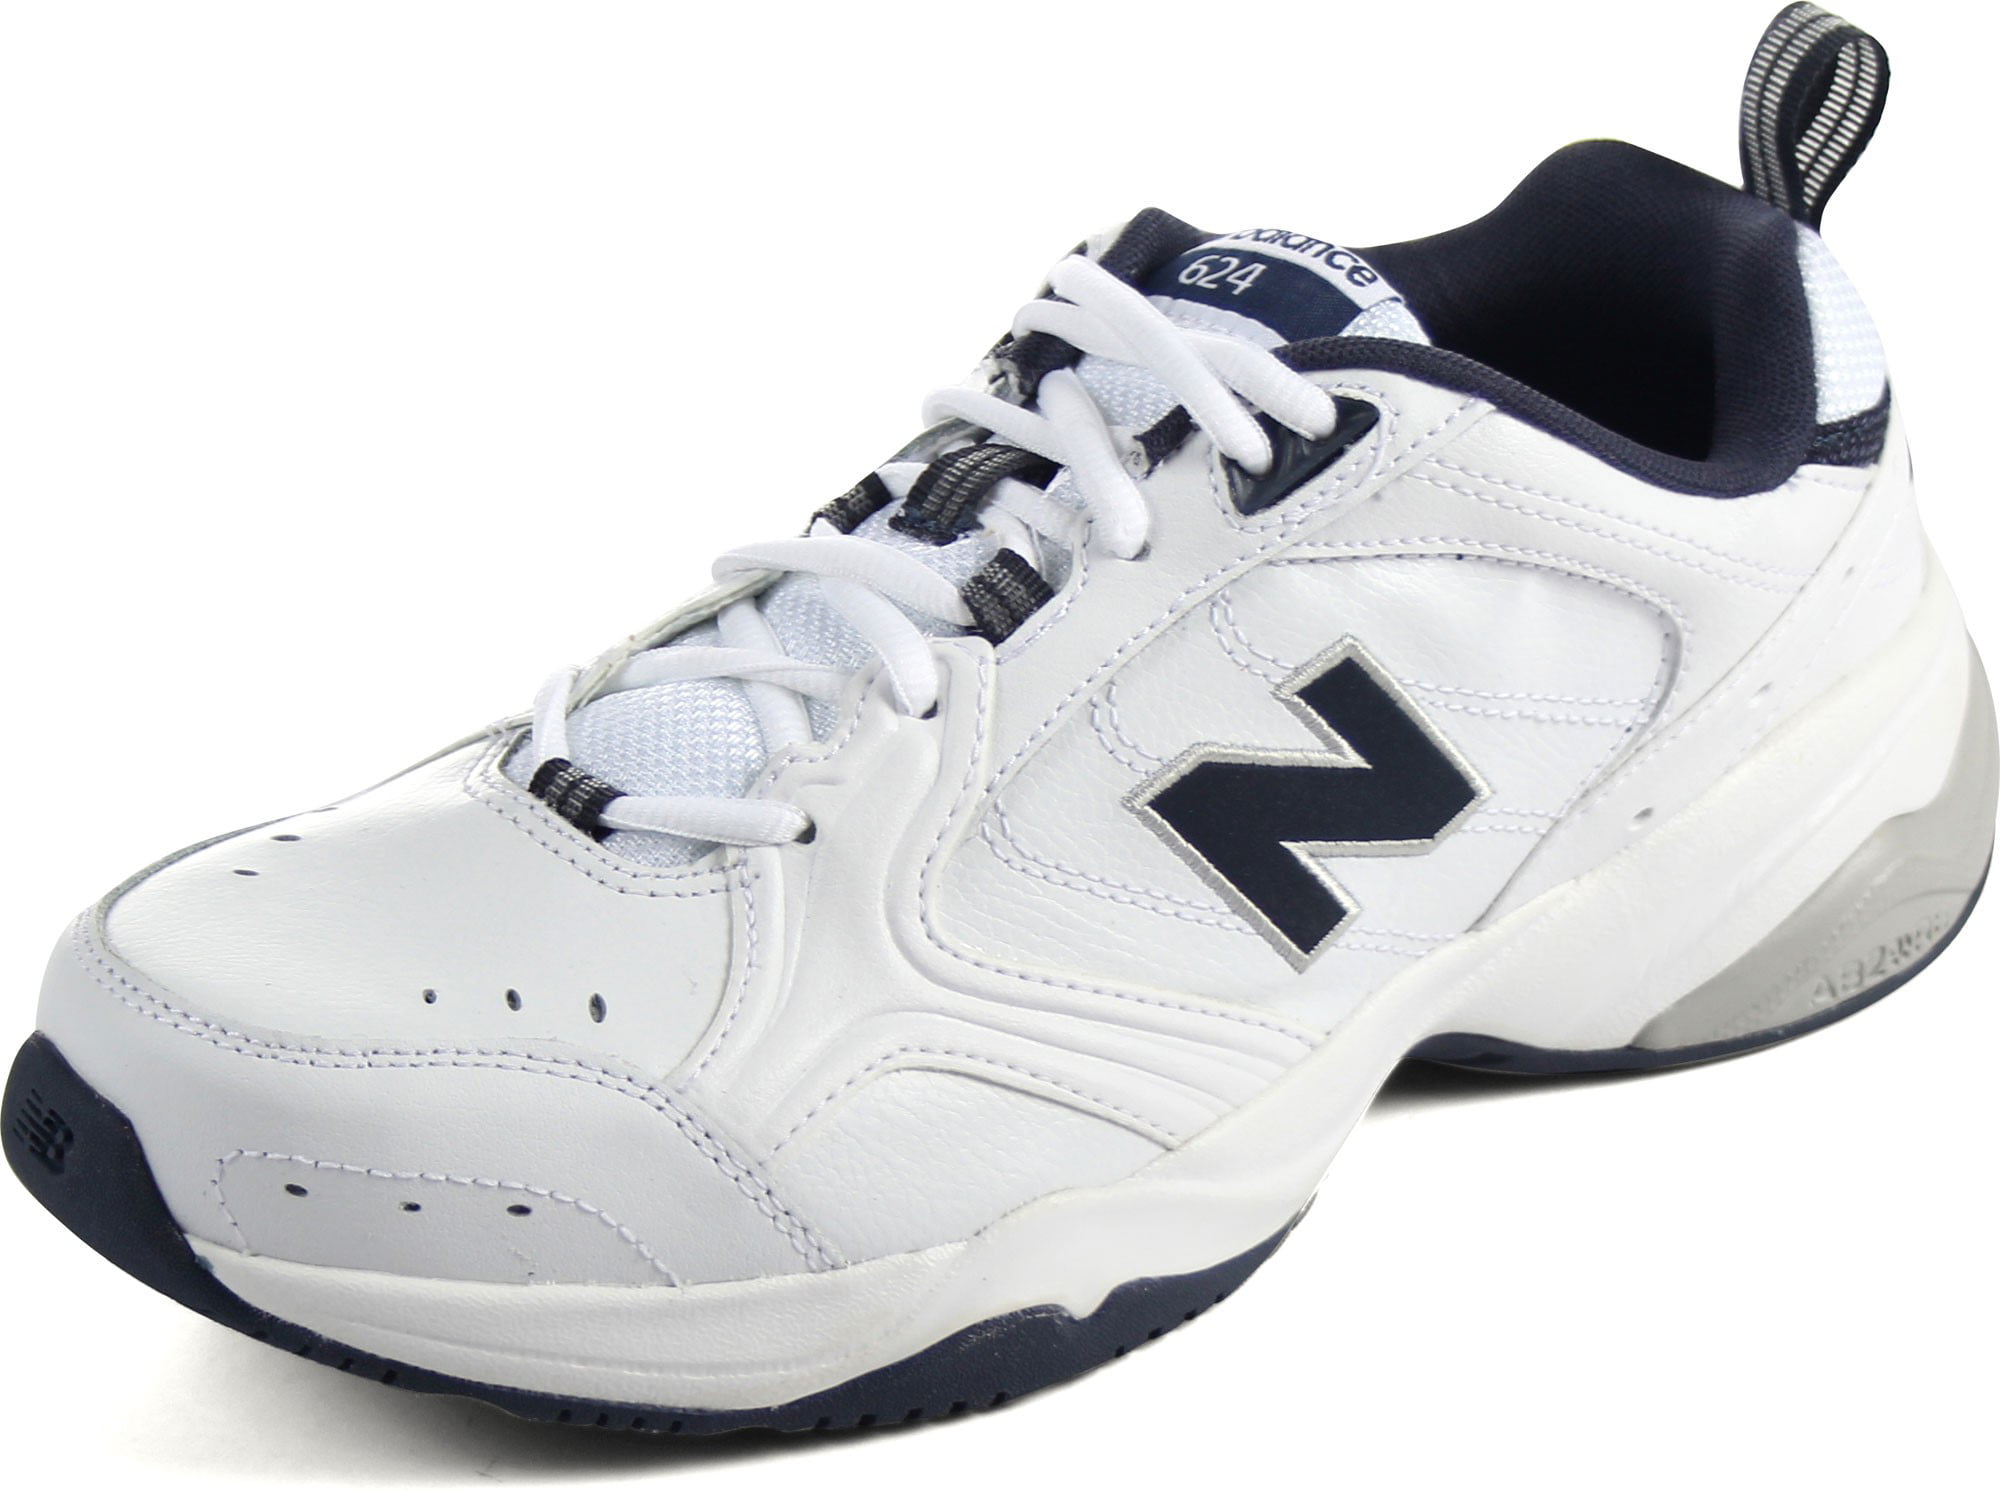 New Balance - New Balance Men's MX624v2 Casual Comfort Training Shoe ...